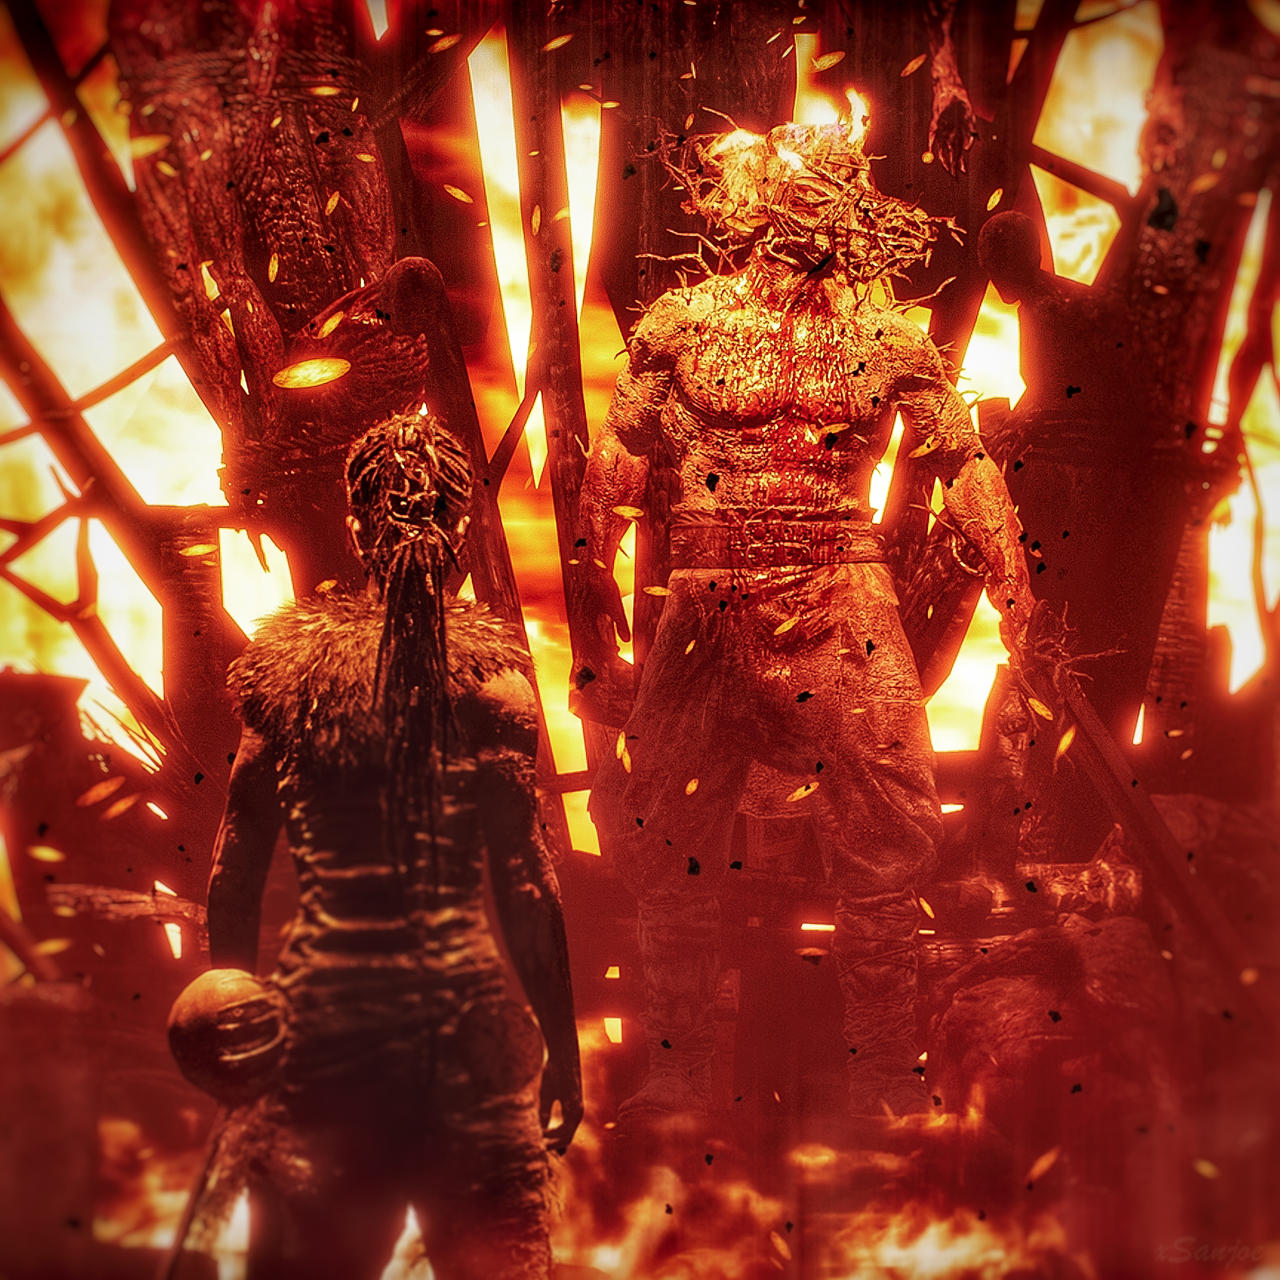 Hellblade: Senua's Sacrifice sur